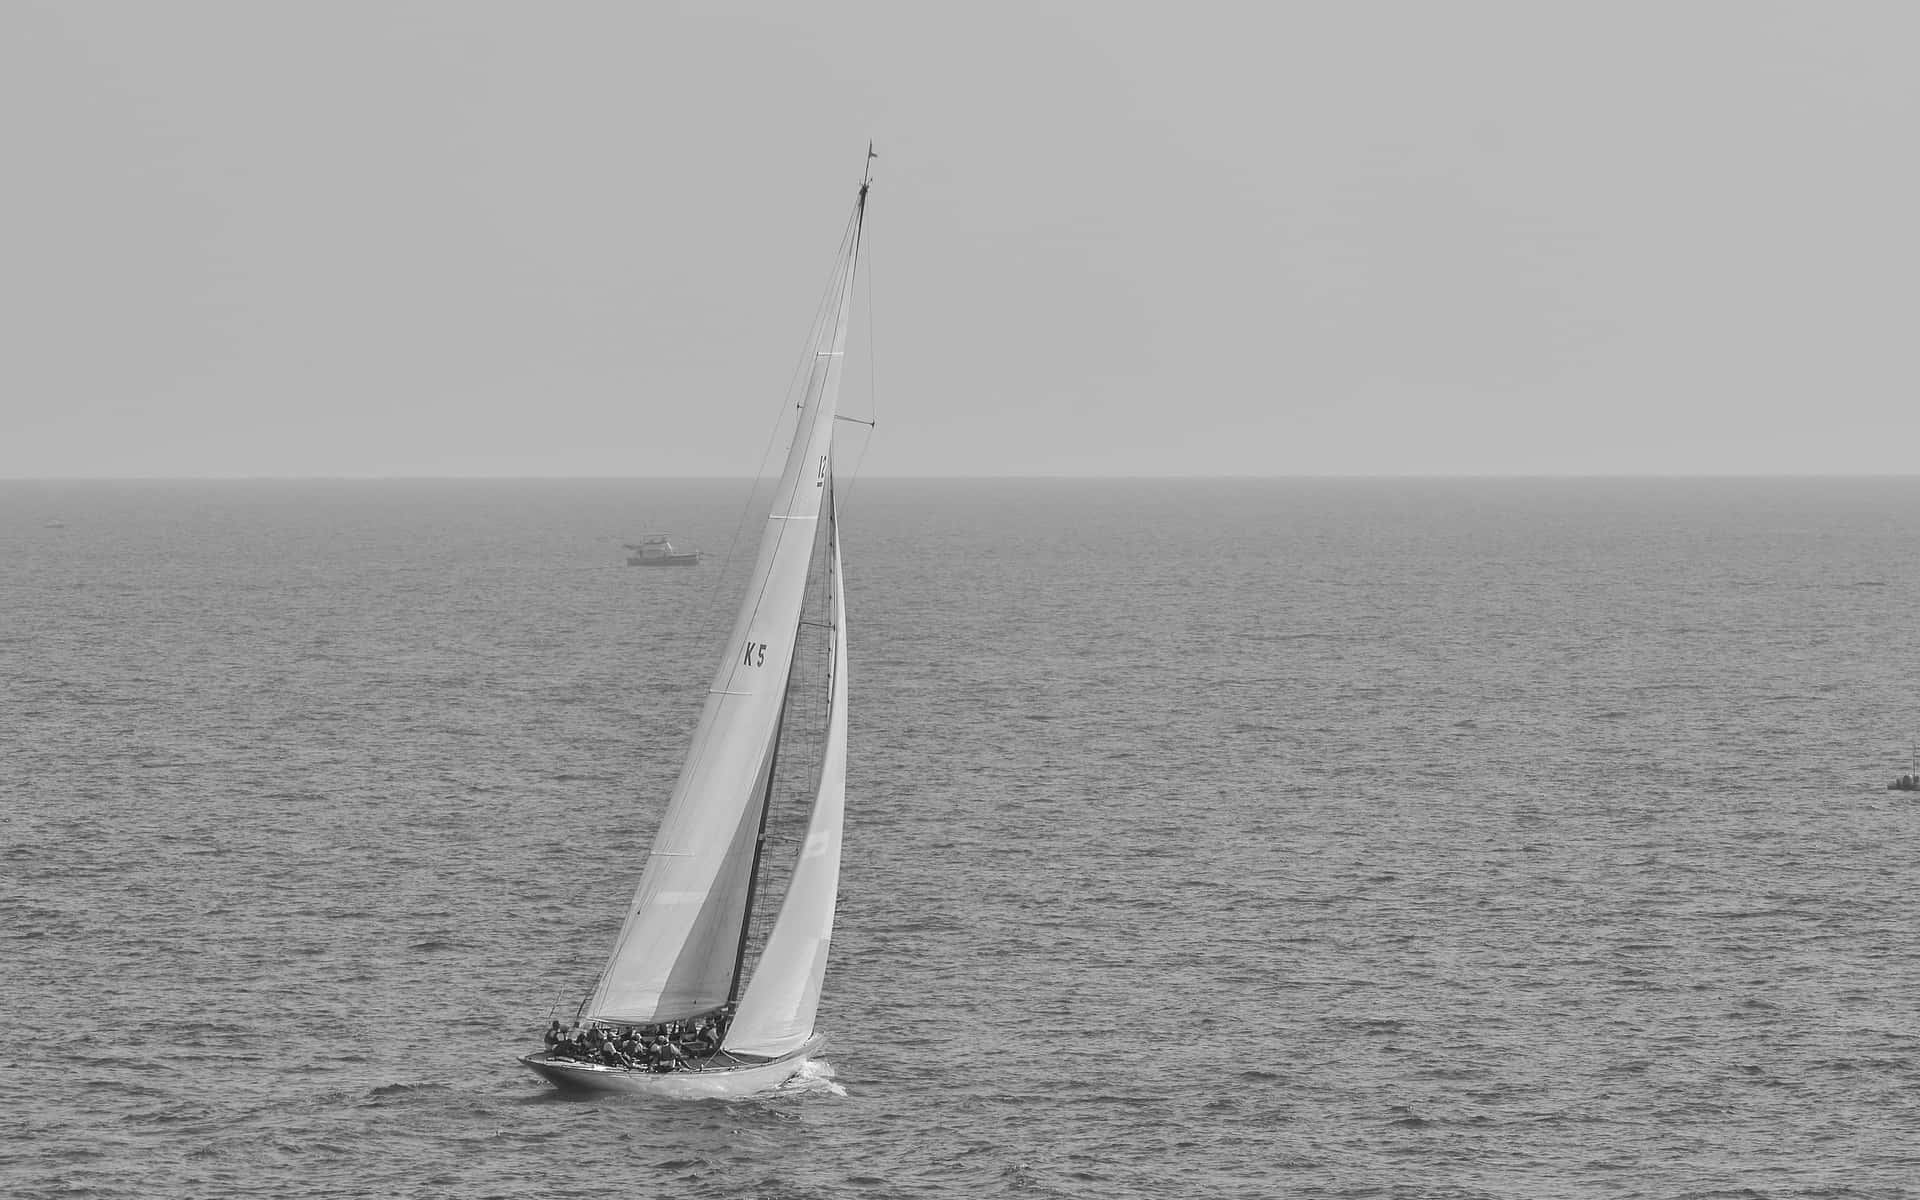 Sailing Yacht Monochrome Ocean Scene Wallpaper